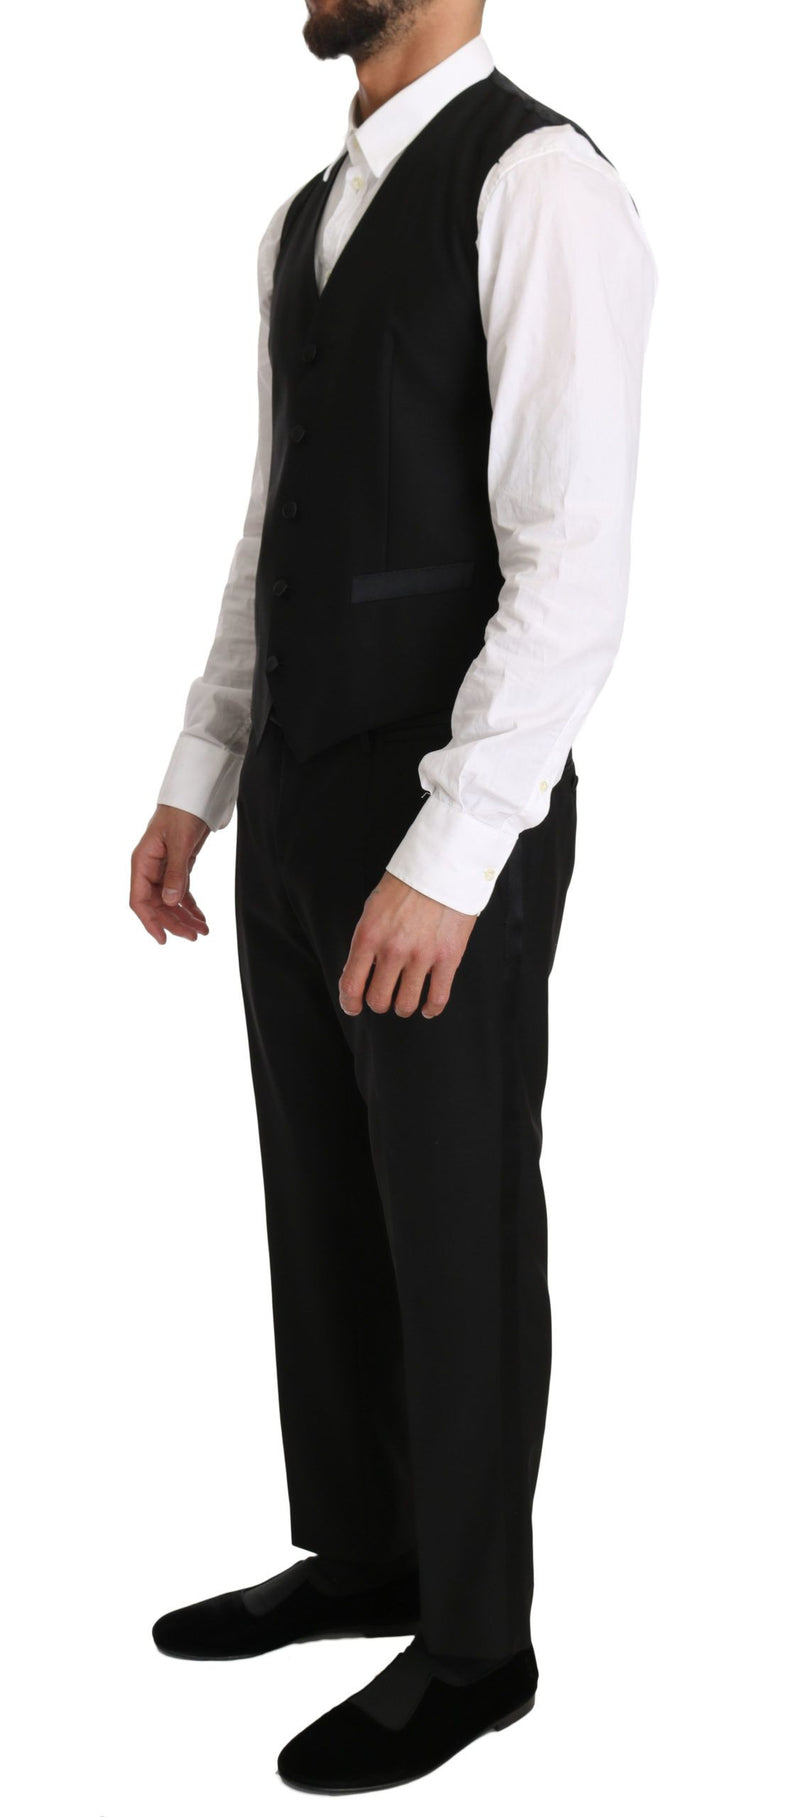 Dolce & Gabbana Black Wool Dress Waistcoat Gillet Men's Vest